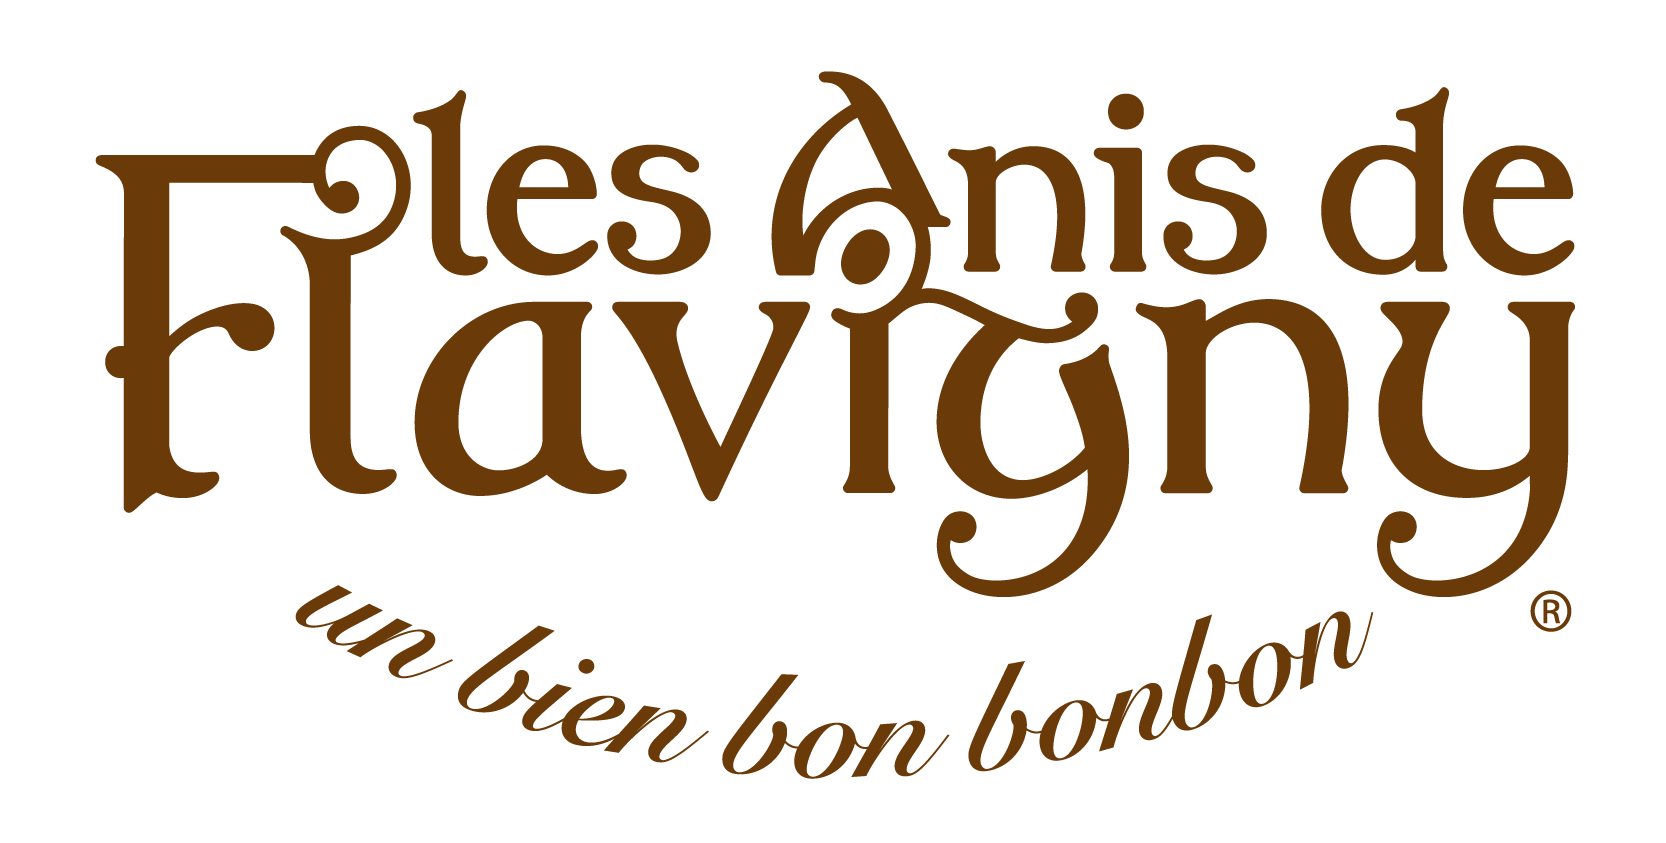 Les-Anis-de-Flavigny - flavigny-sur-Ozerain